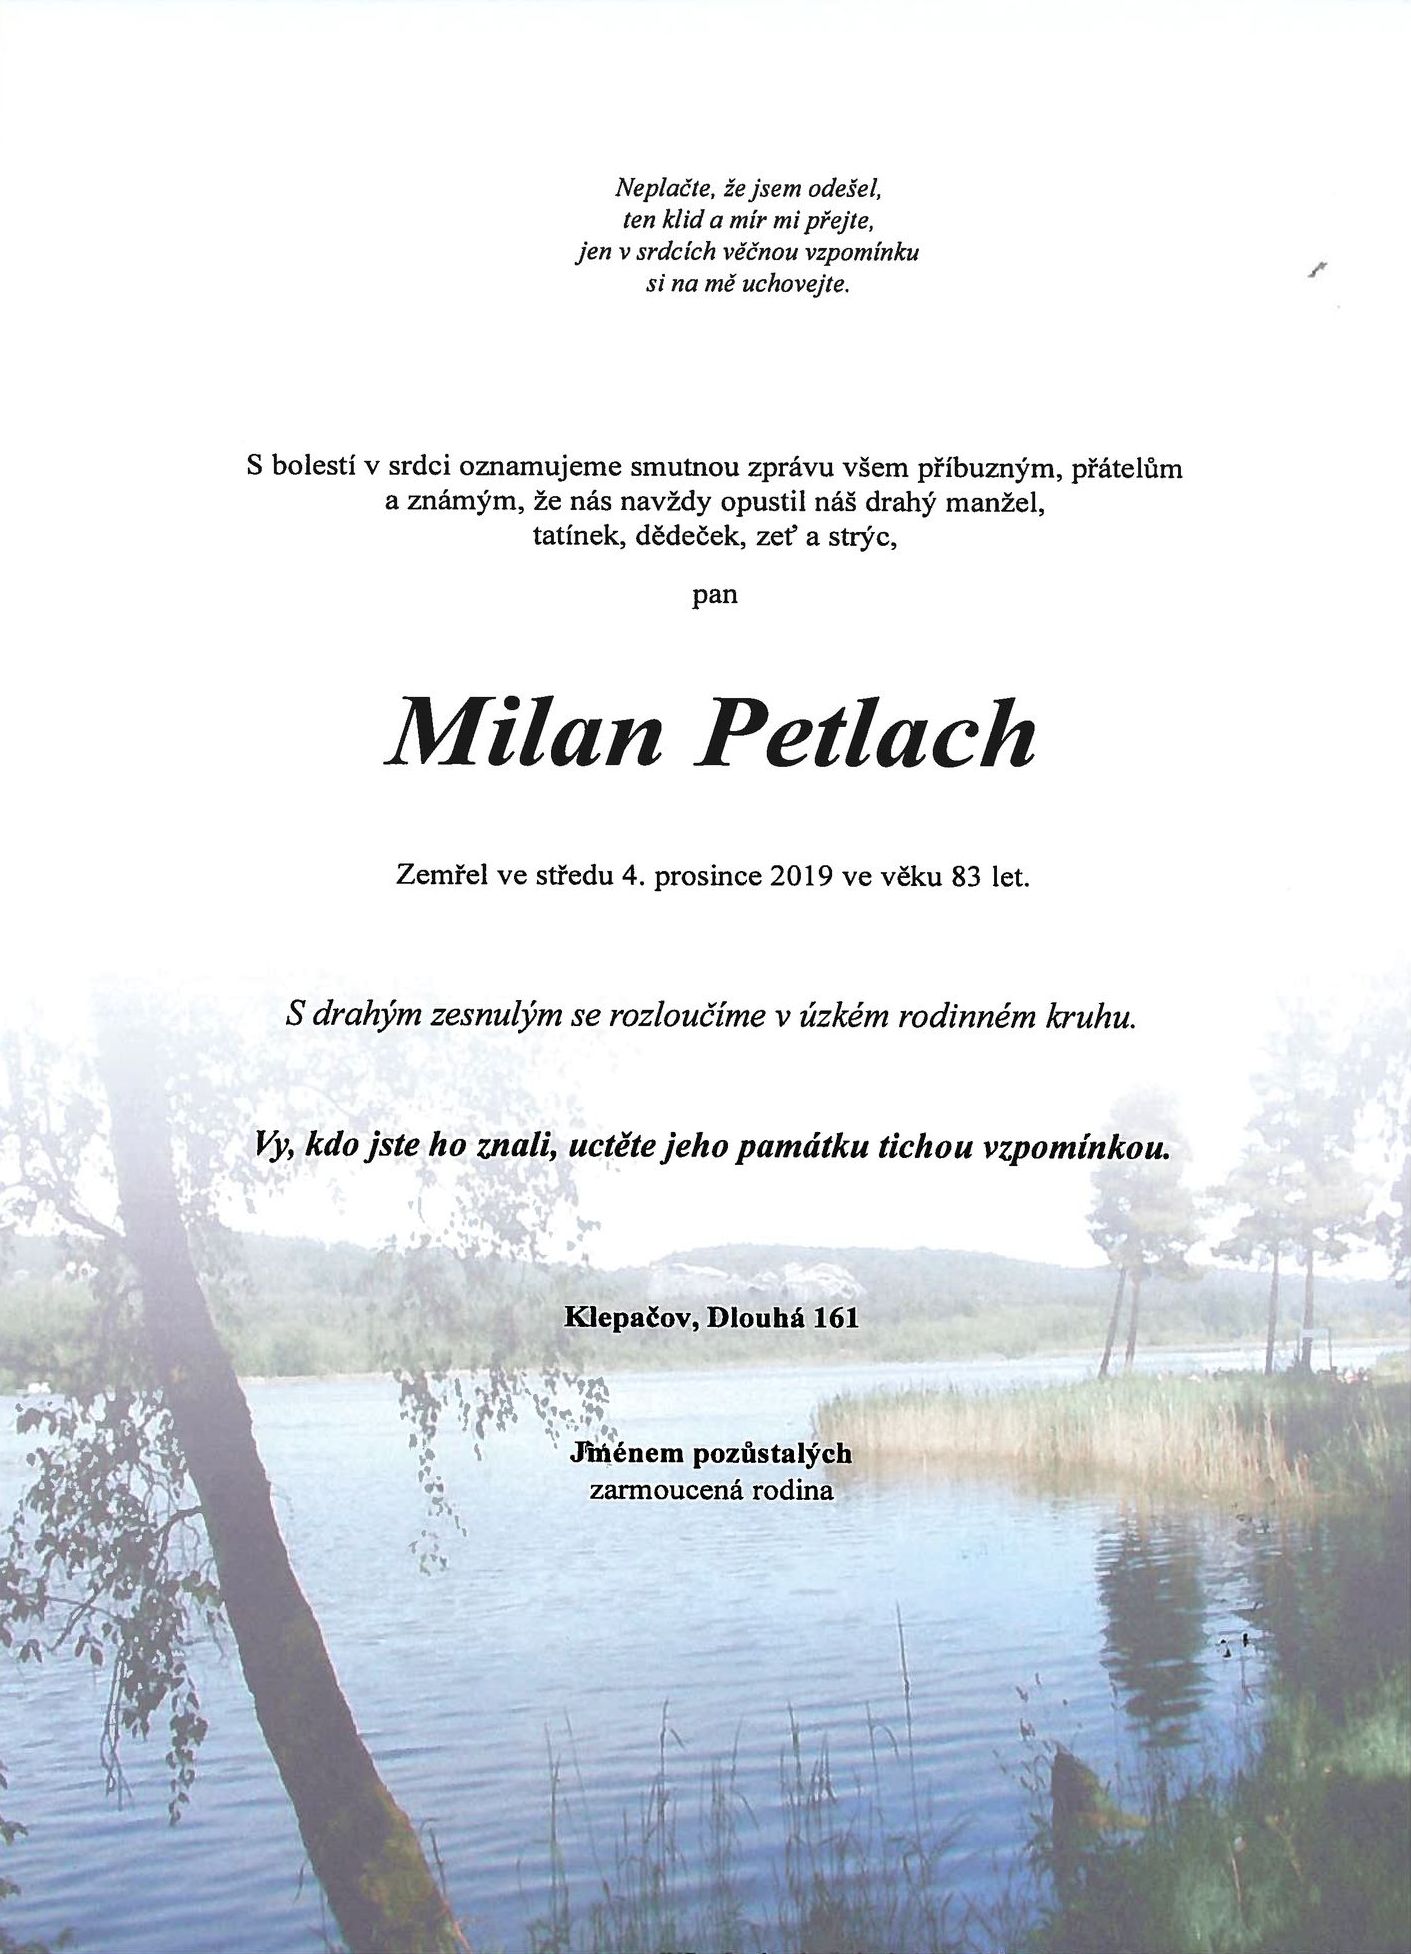 Milan Petlach